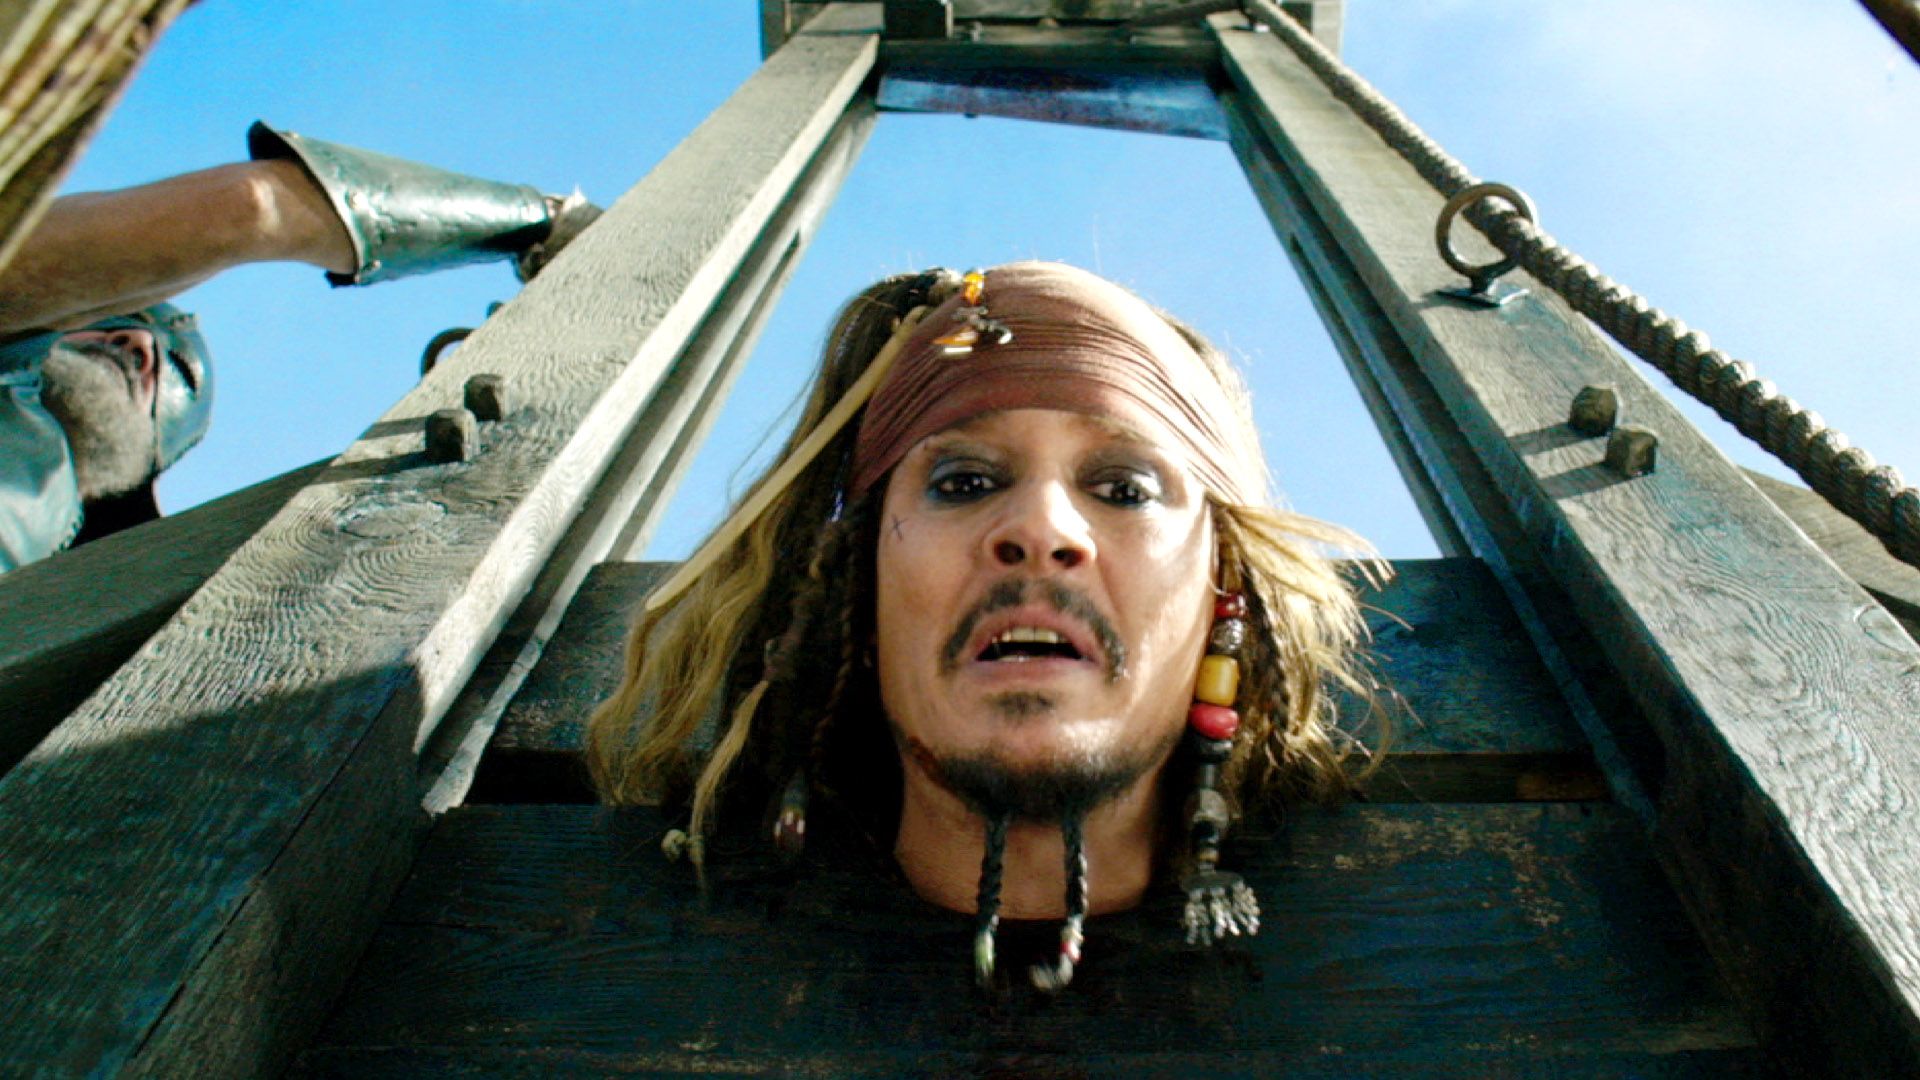 Jack Sparrow Guillotine Scene in Dead Men Tell No Tales